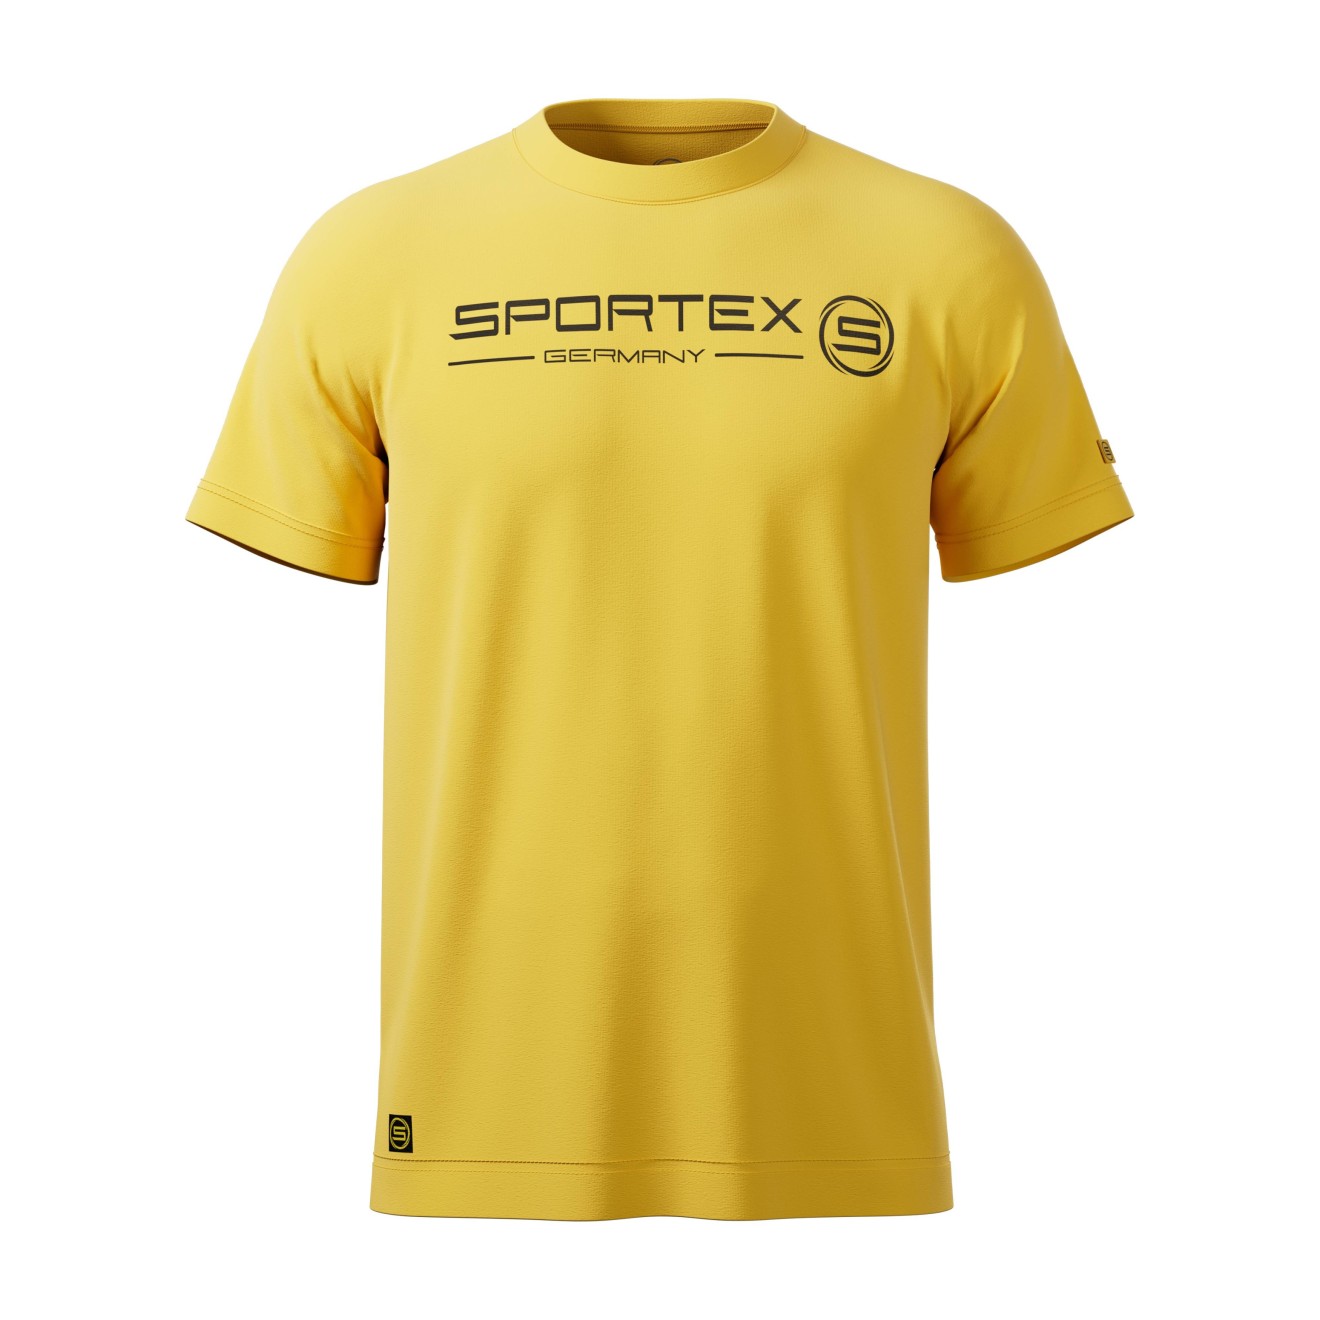 sportex apparel